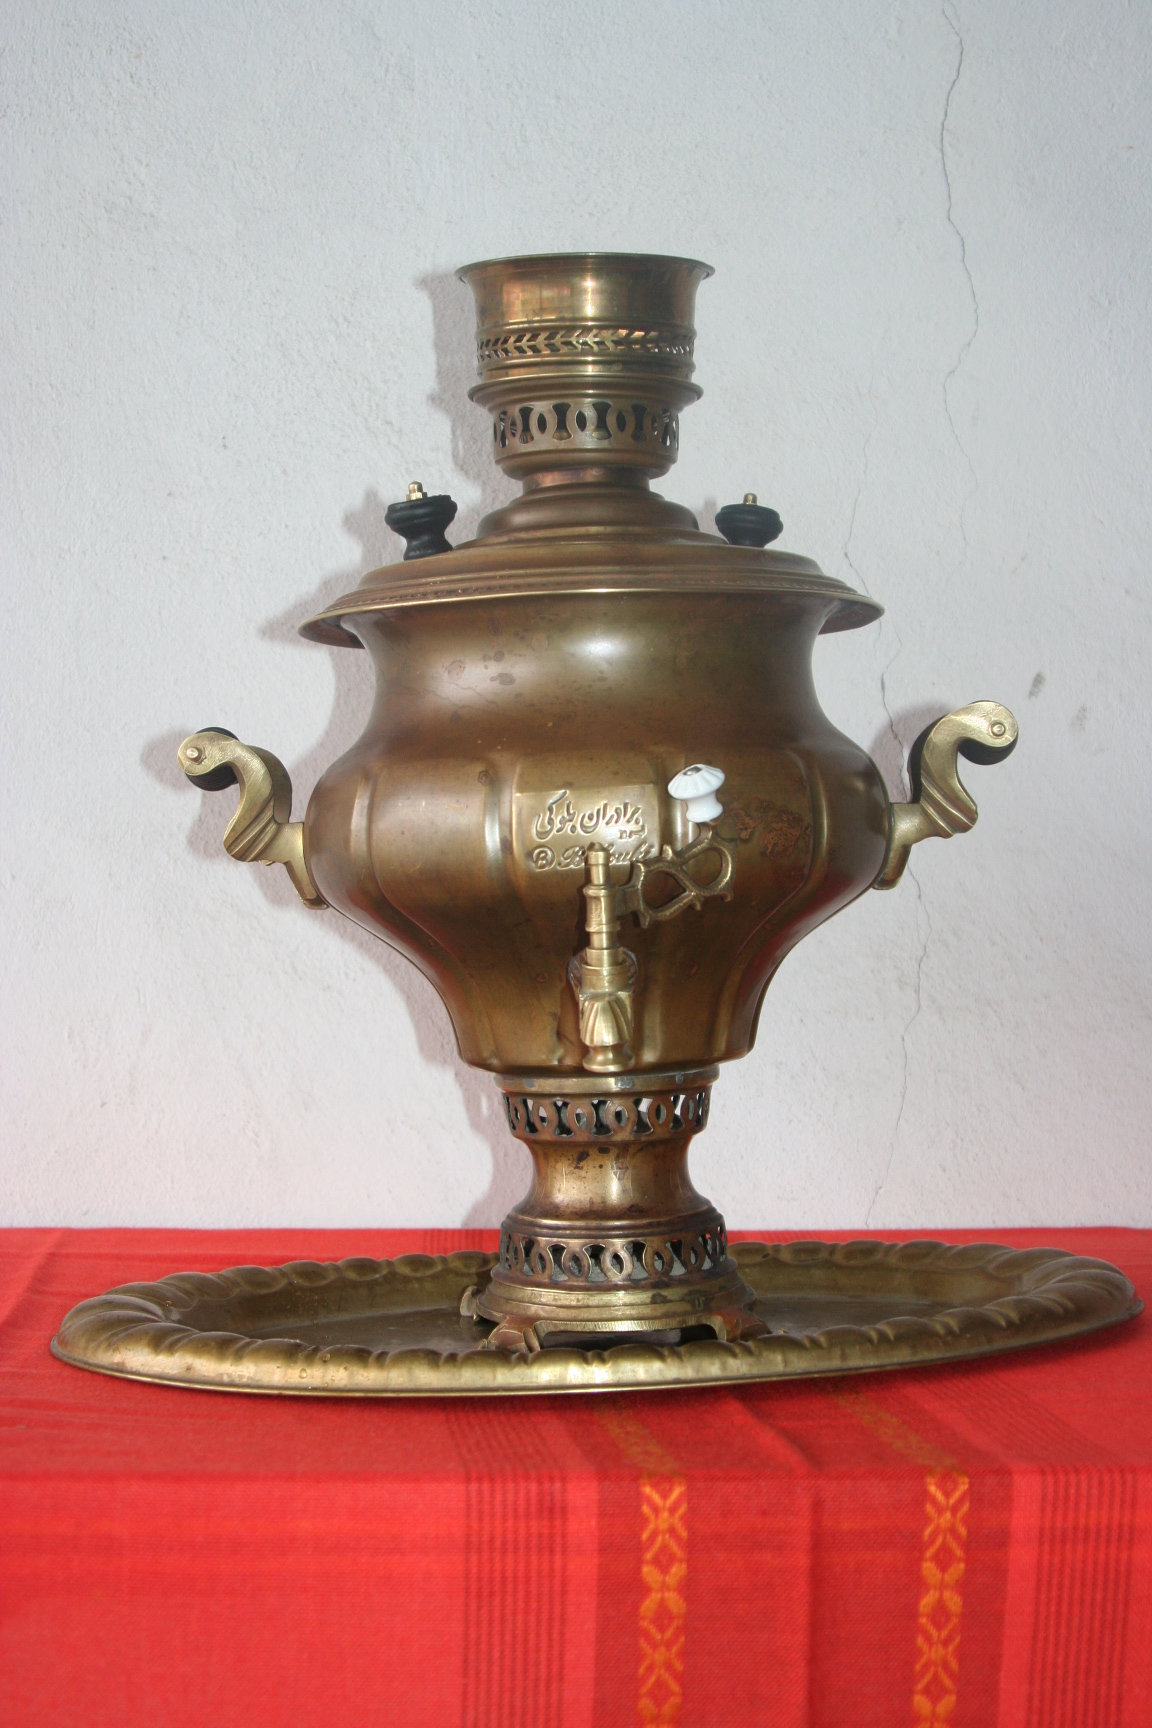 Old copper teapot samovar